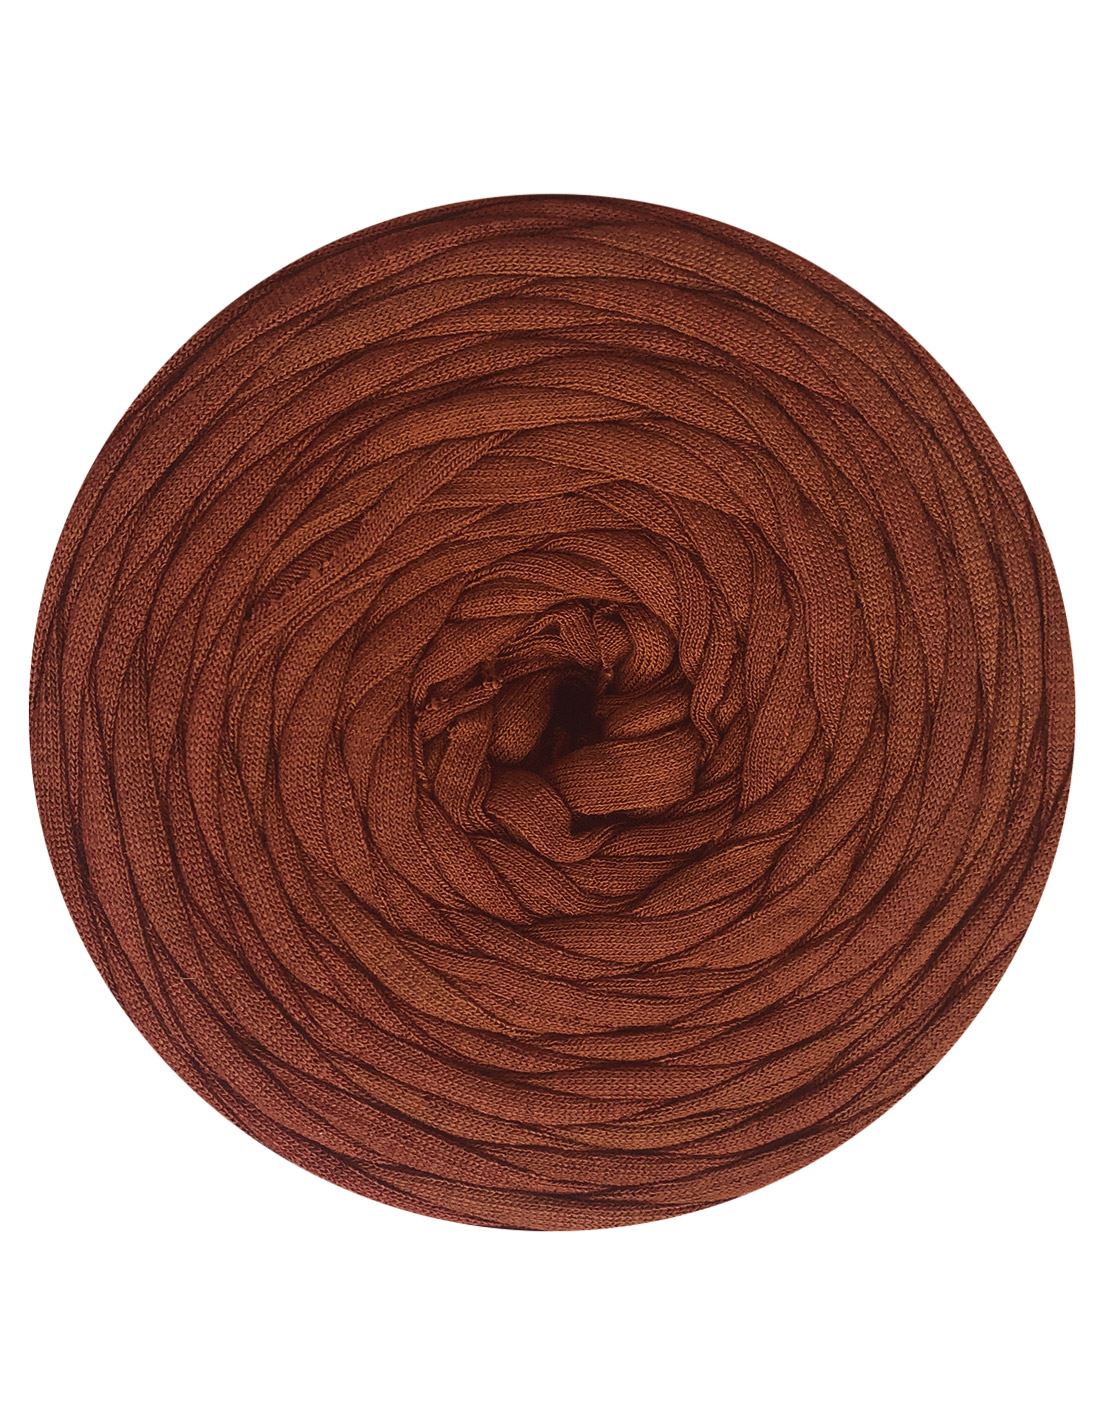 Hot chocolate brown t-shirt yarn by Rescue Yarn (100-120m)